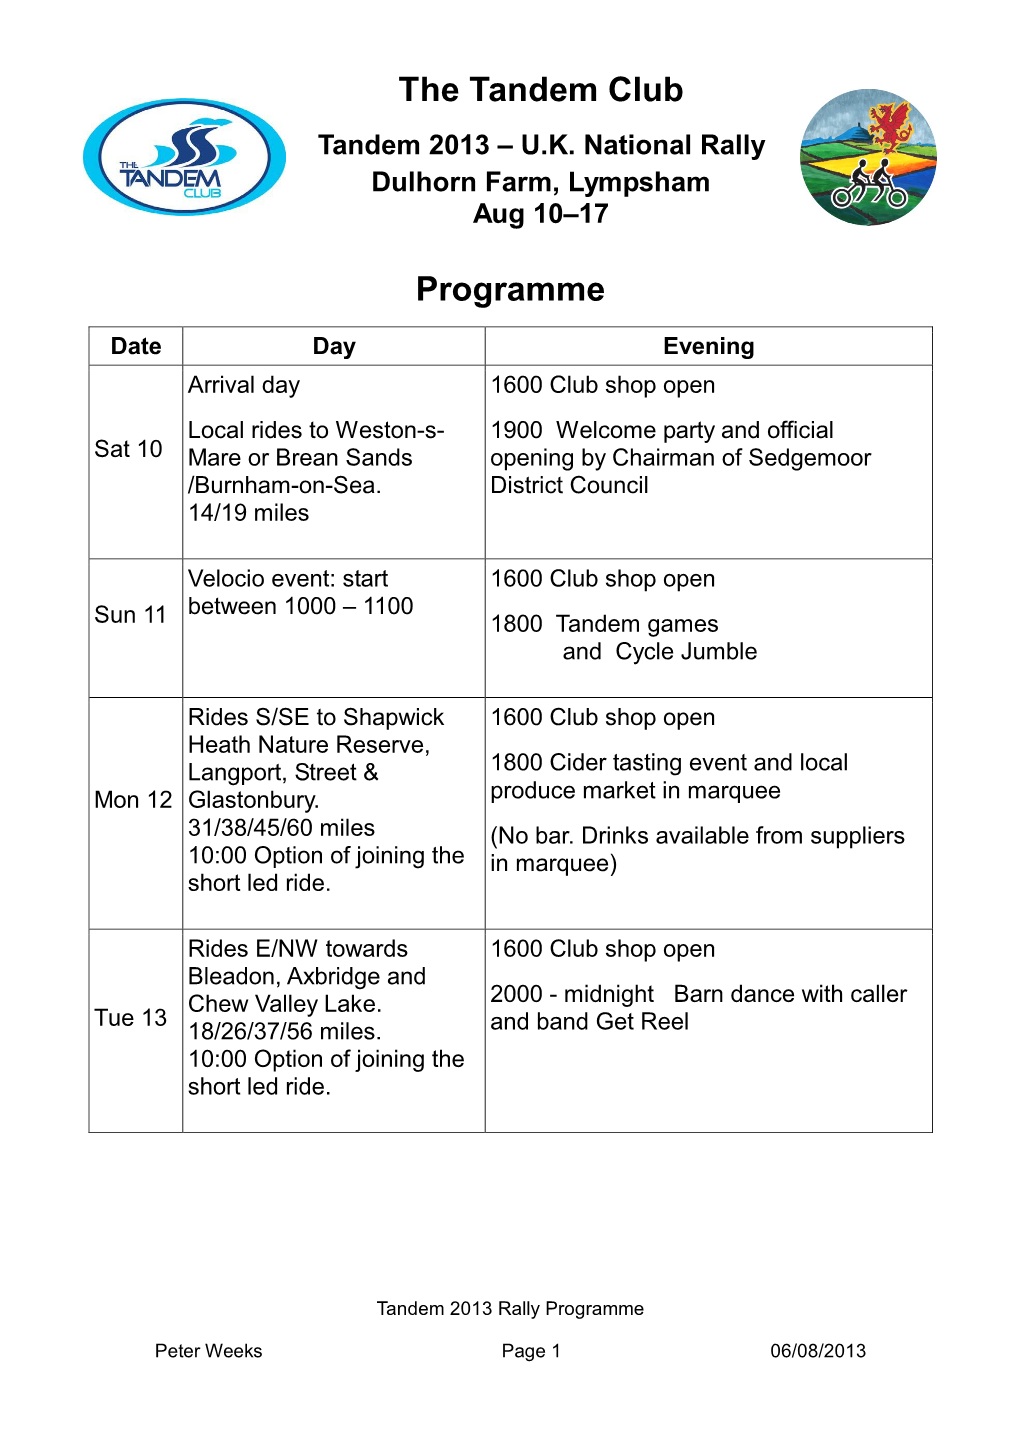 The Tandem Club Programme